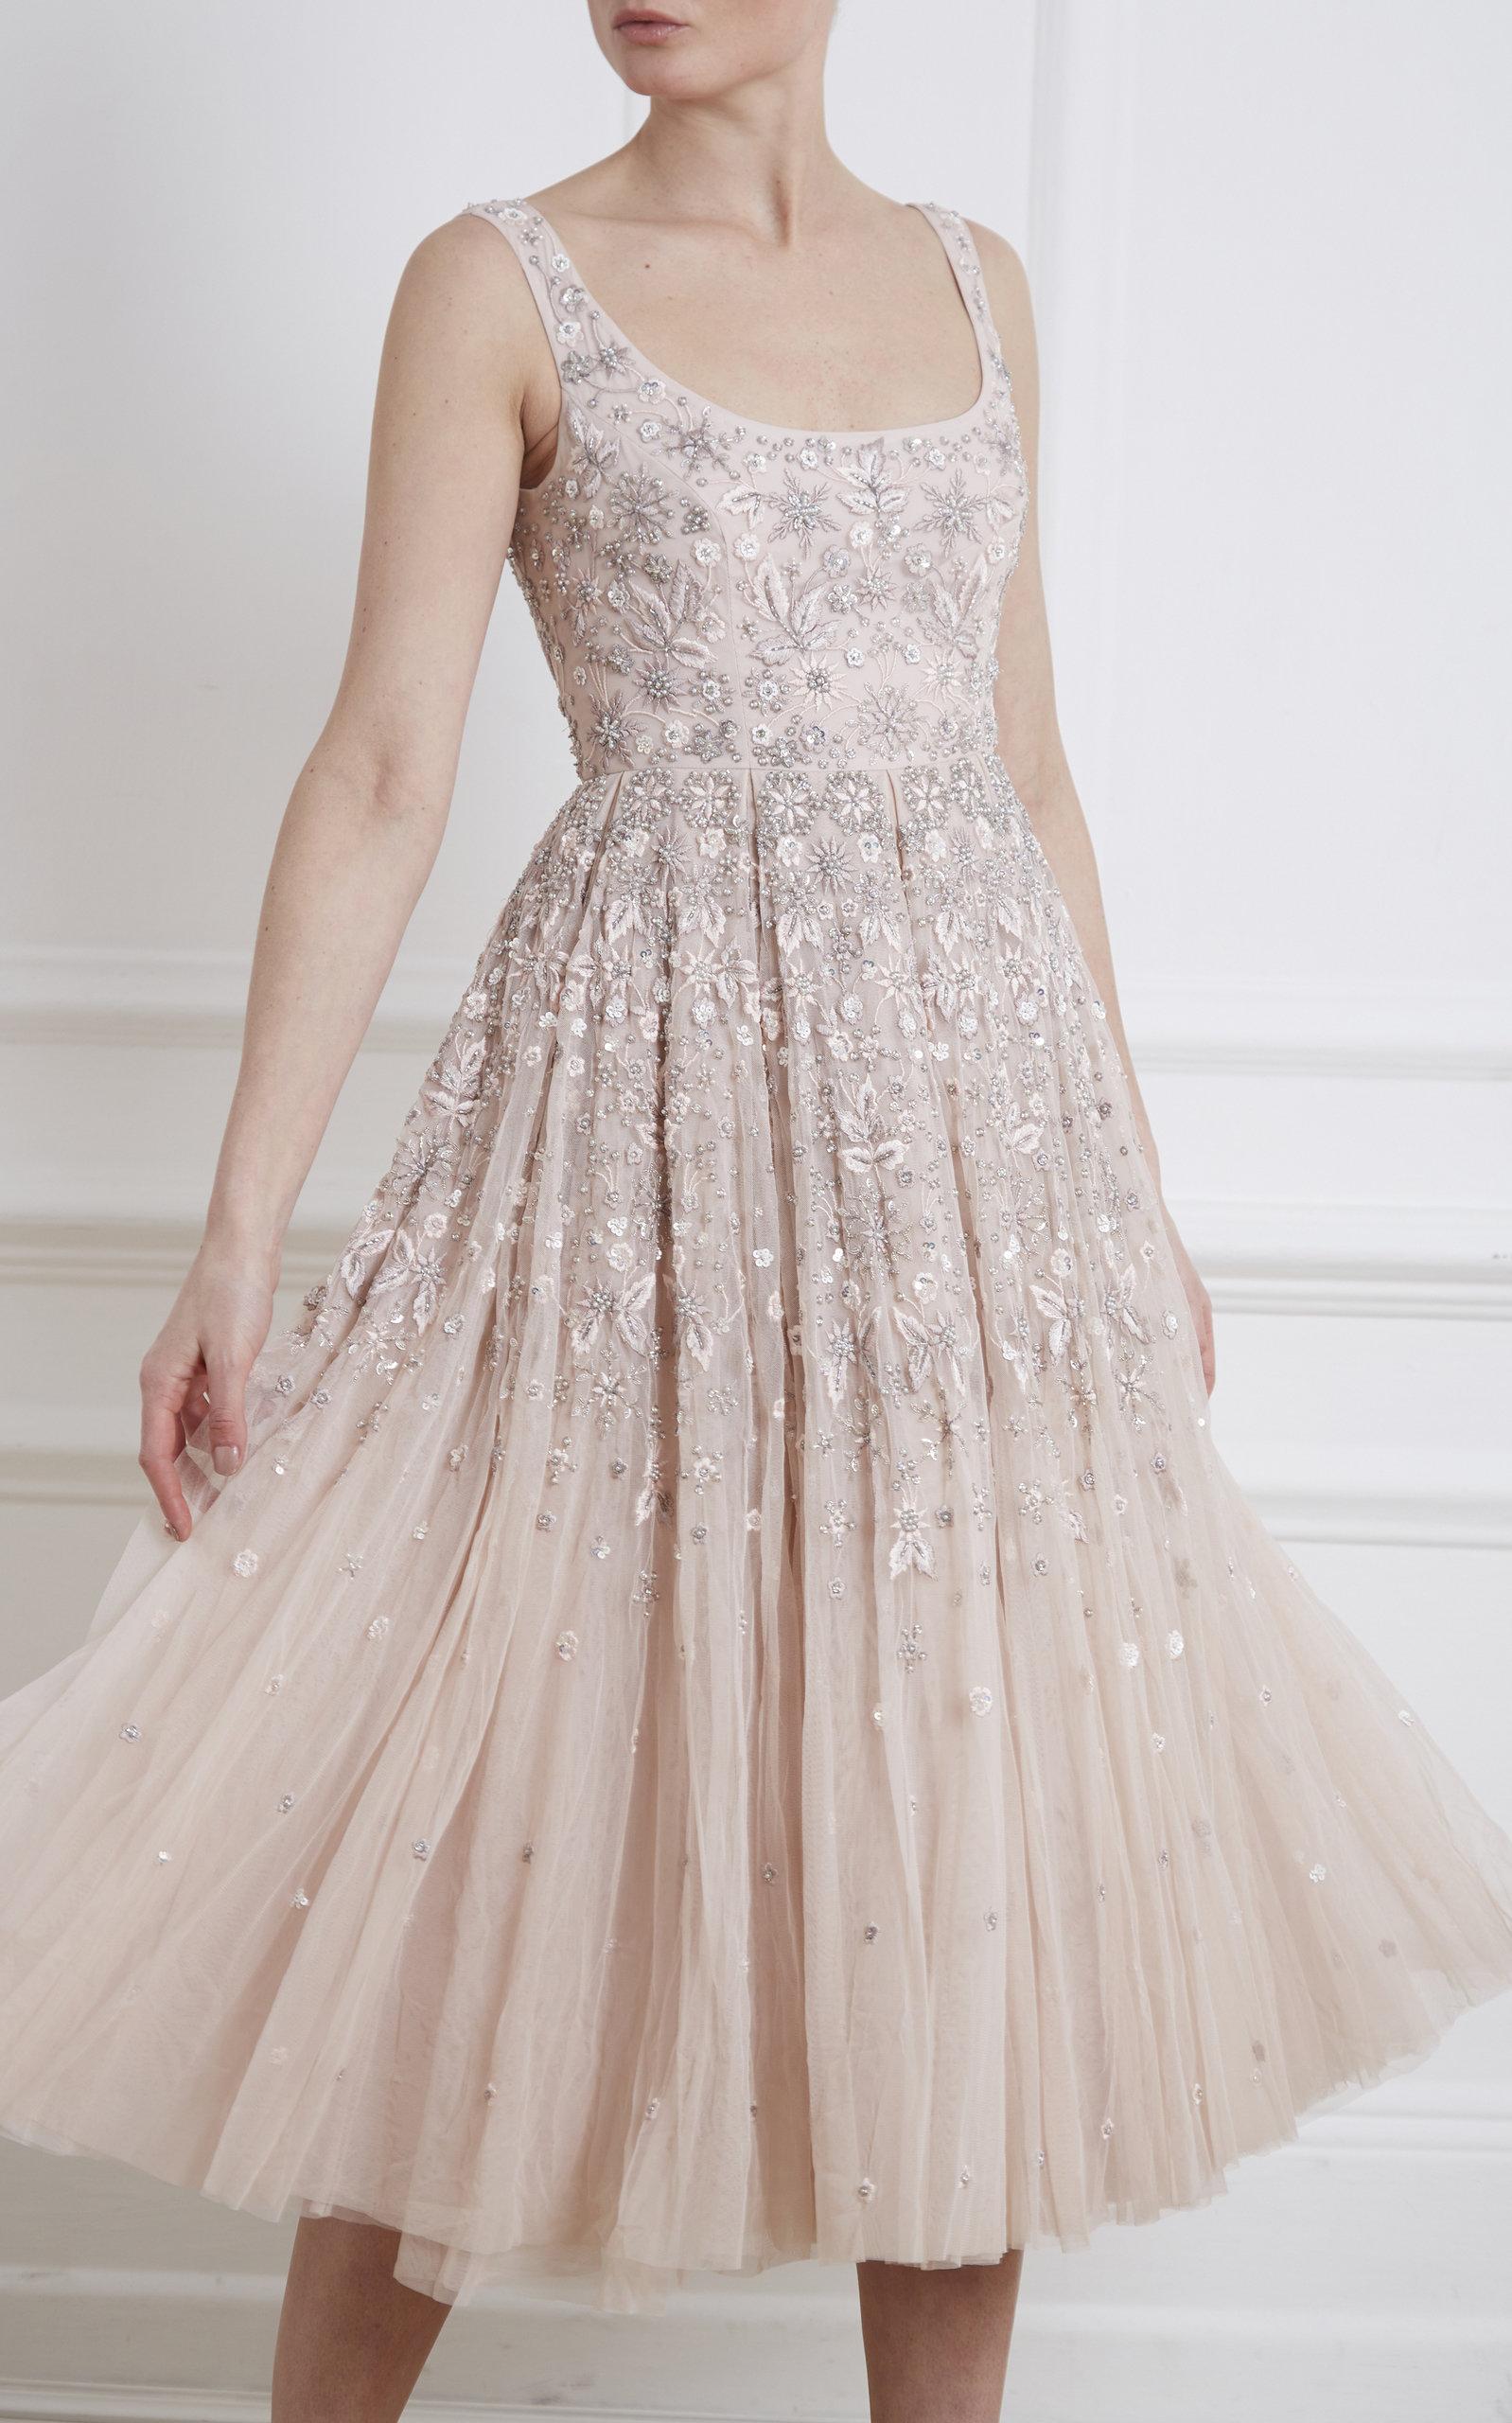 Buy > snowflake prom dress > in stock